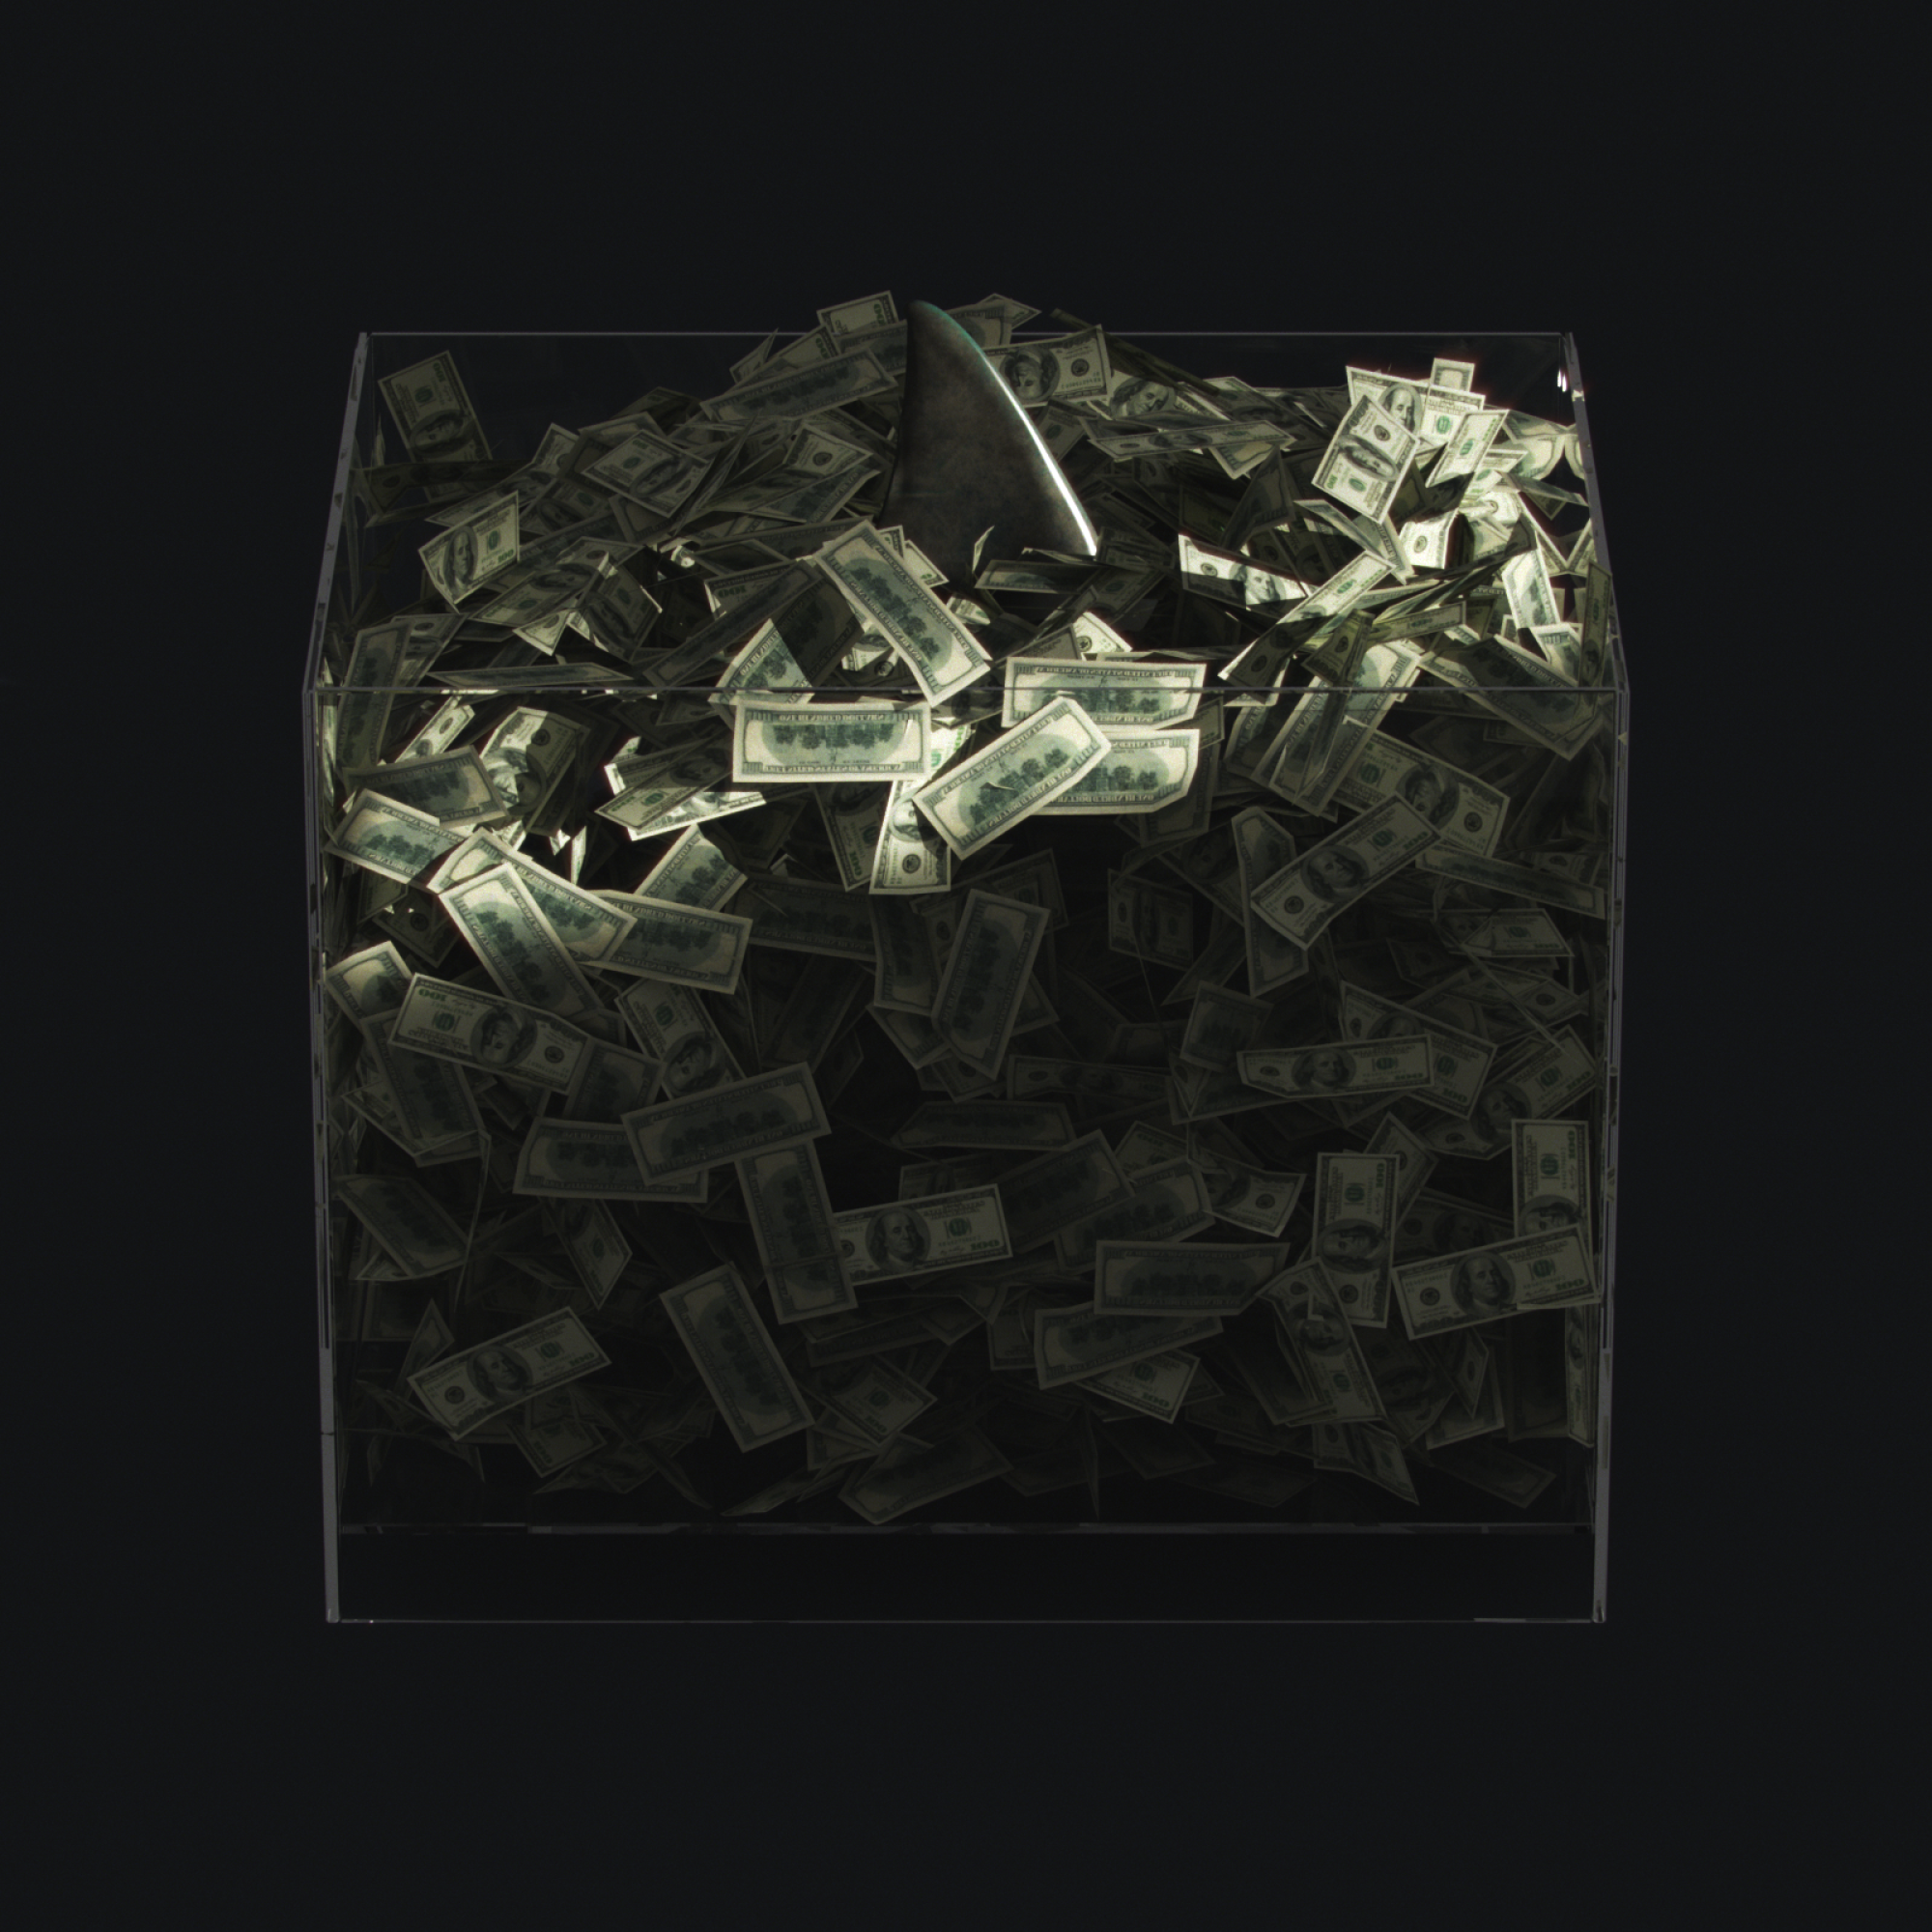 Illustration of a spotlight cutting across a glass box full of loose hundred-dollar bills